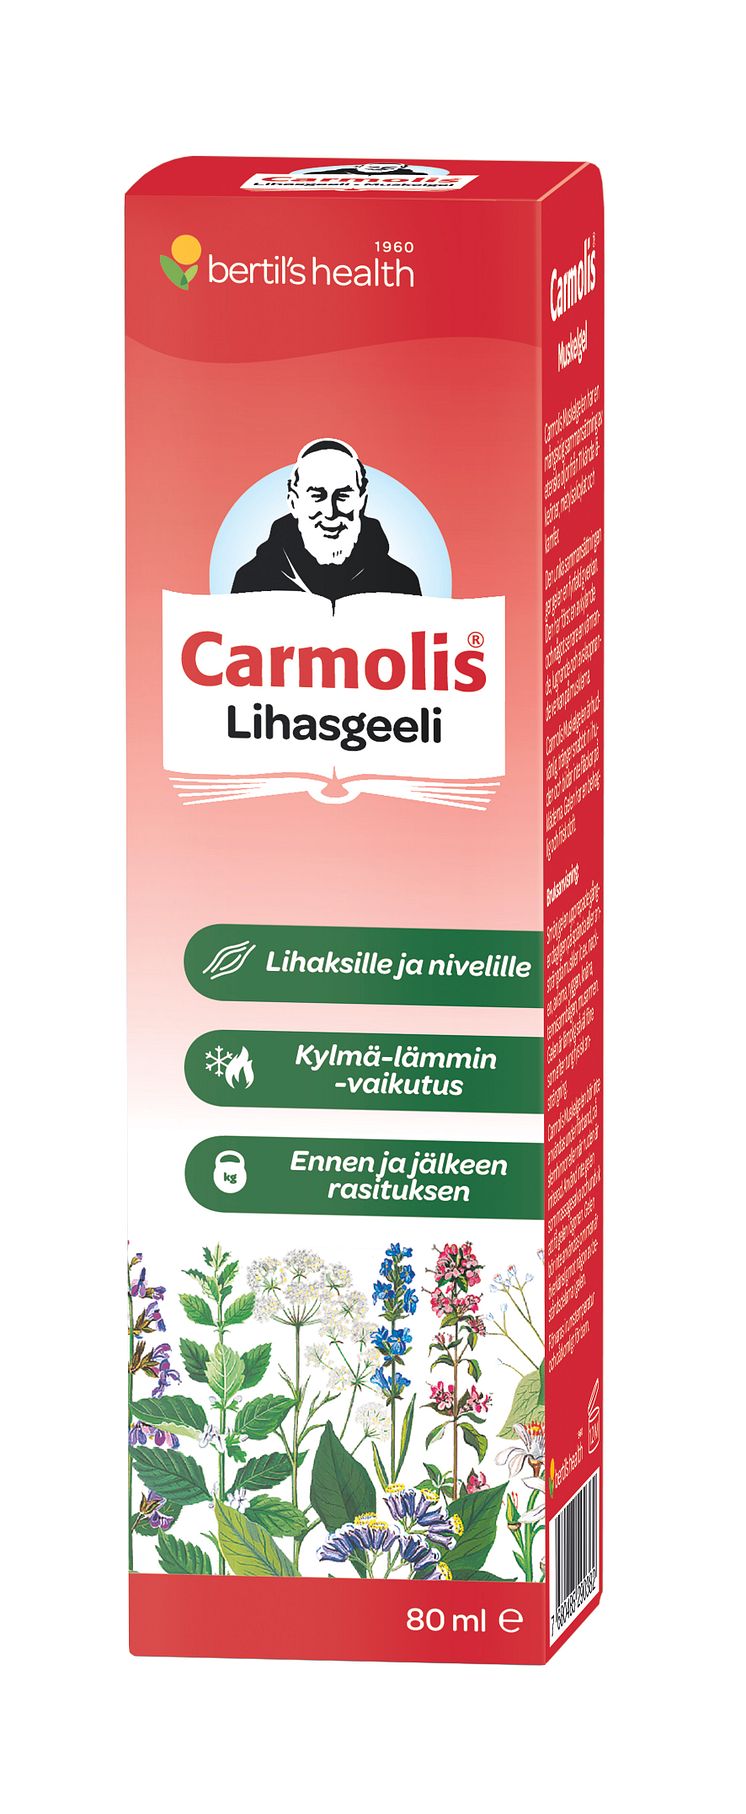 Carmolis_Lihasgeeli BOX cmyk